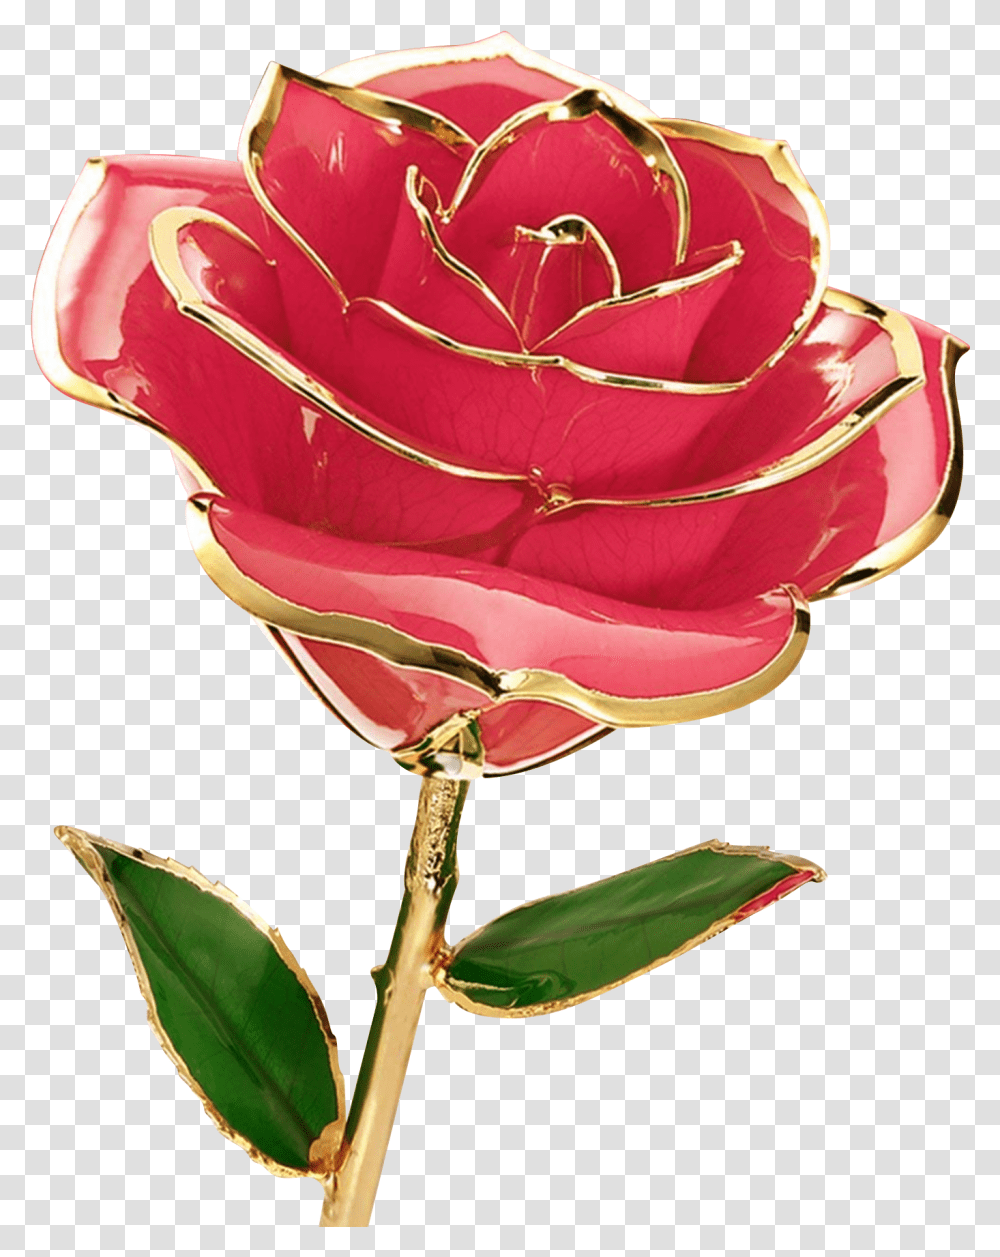 Rose Flower Images Free Download Searchpngcom Rose Flower Images Download, Plant, Petal, Blossom, Geranium Transparent Png